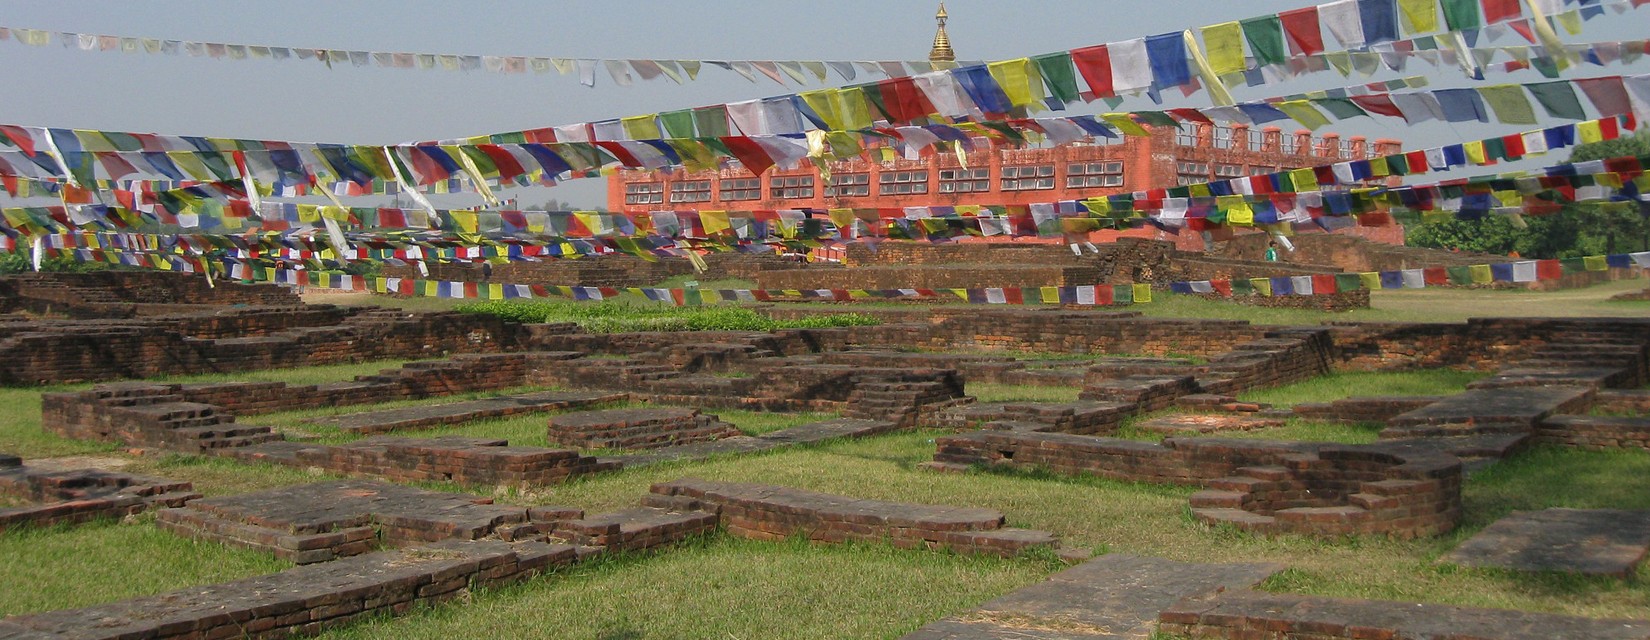 Lumbini - birthplace of Buddha